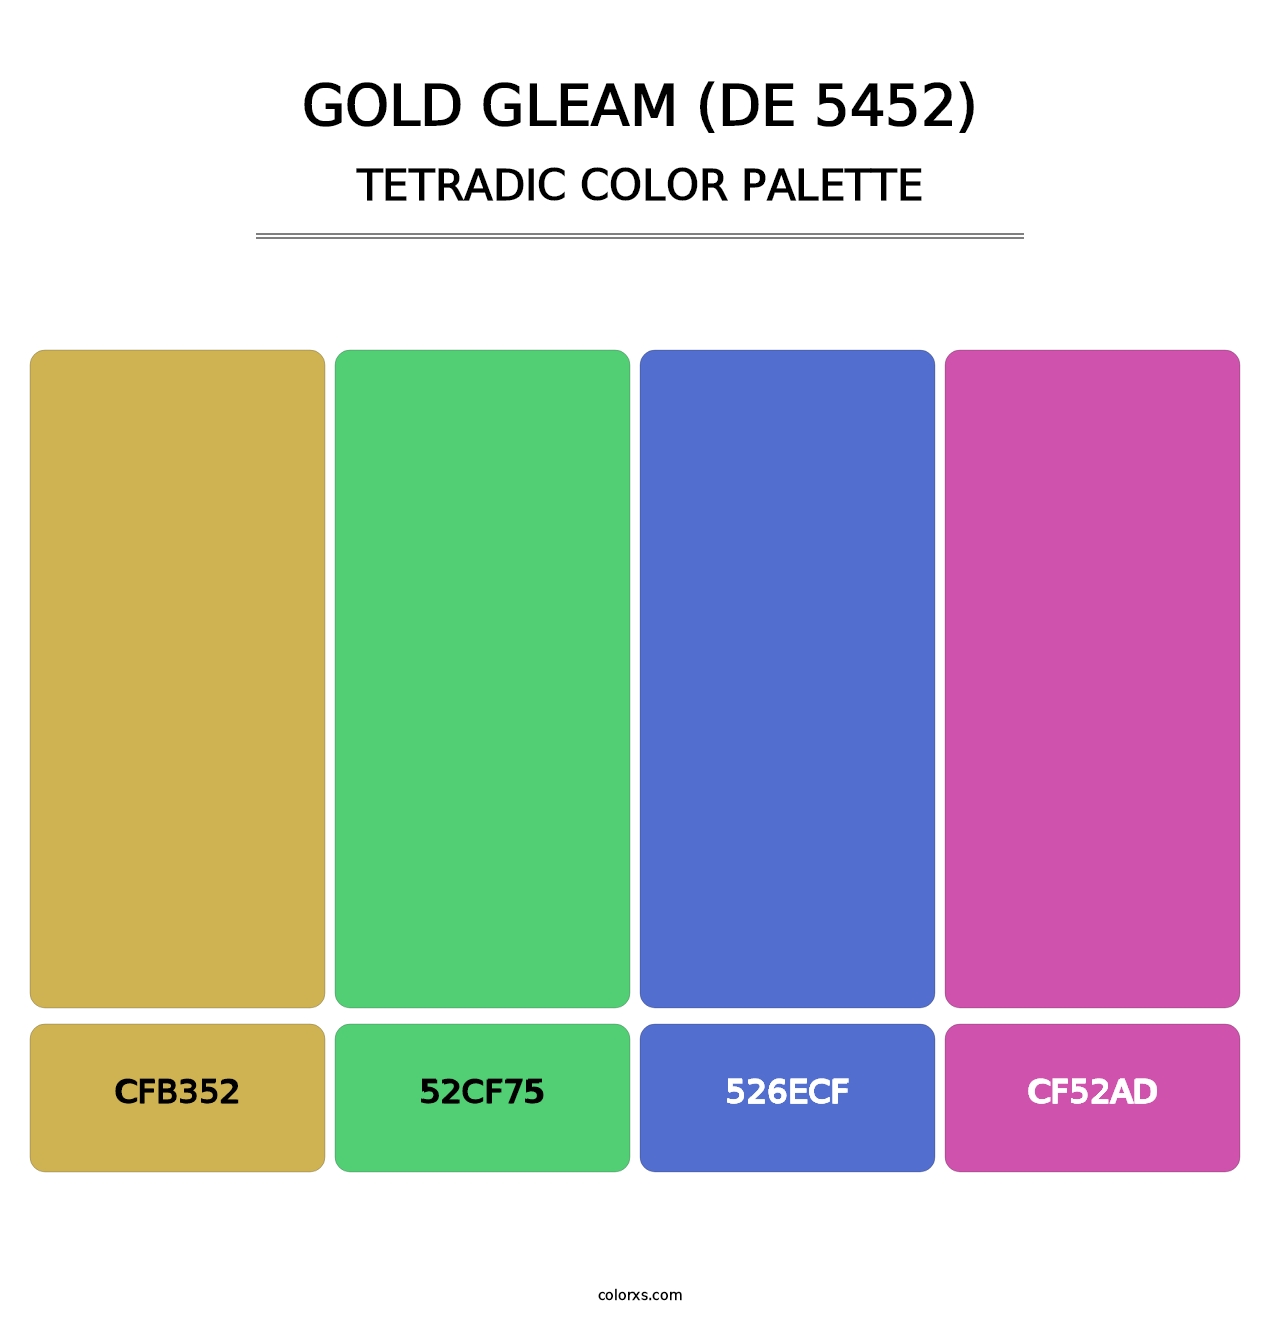 Gold Gleam (DE 5452) - Tetradic Color Palette